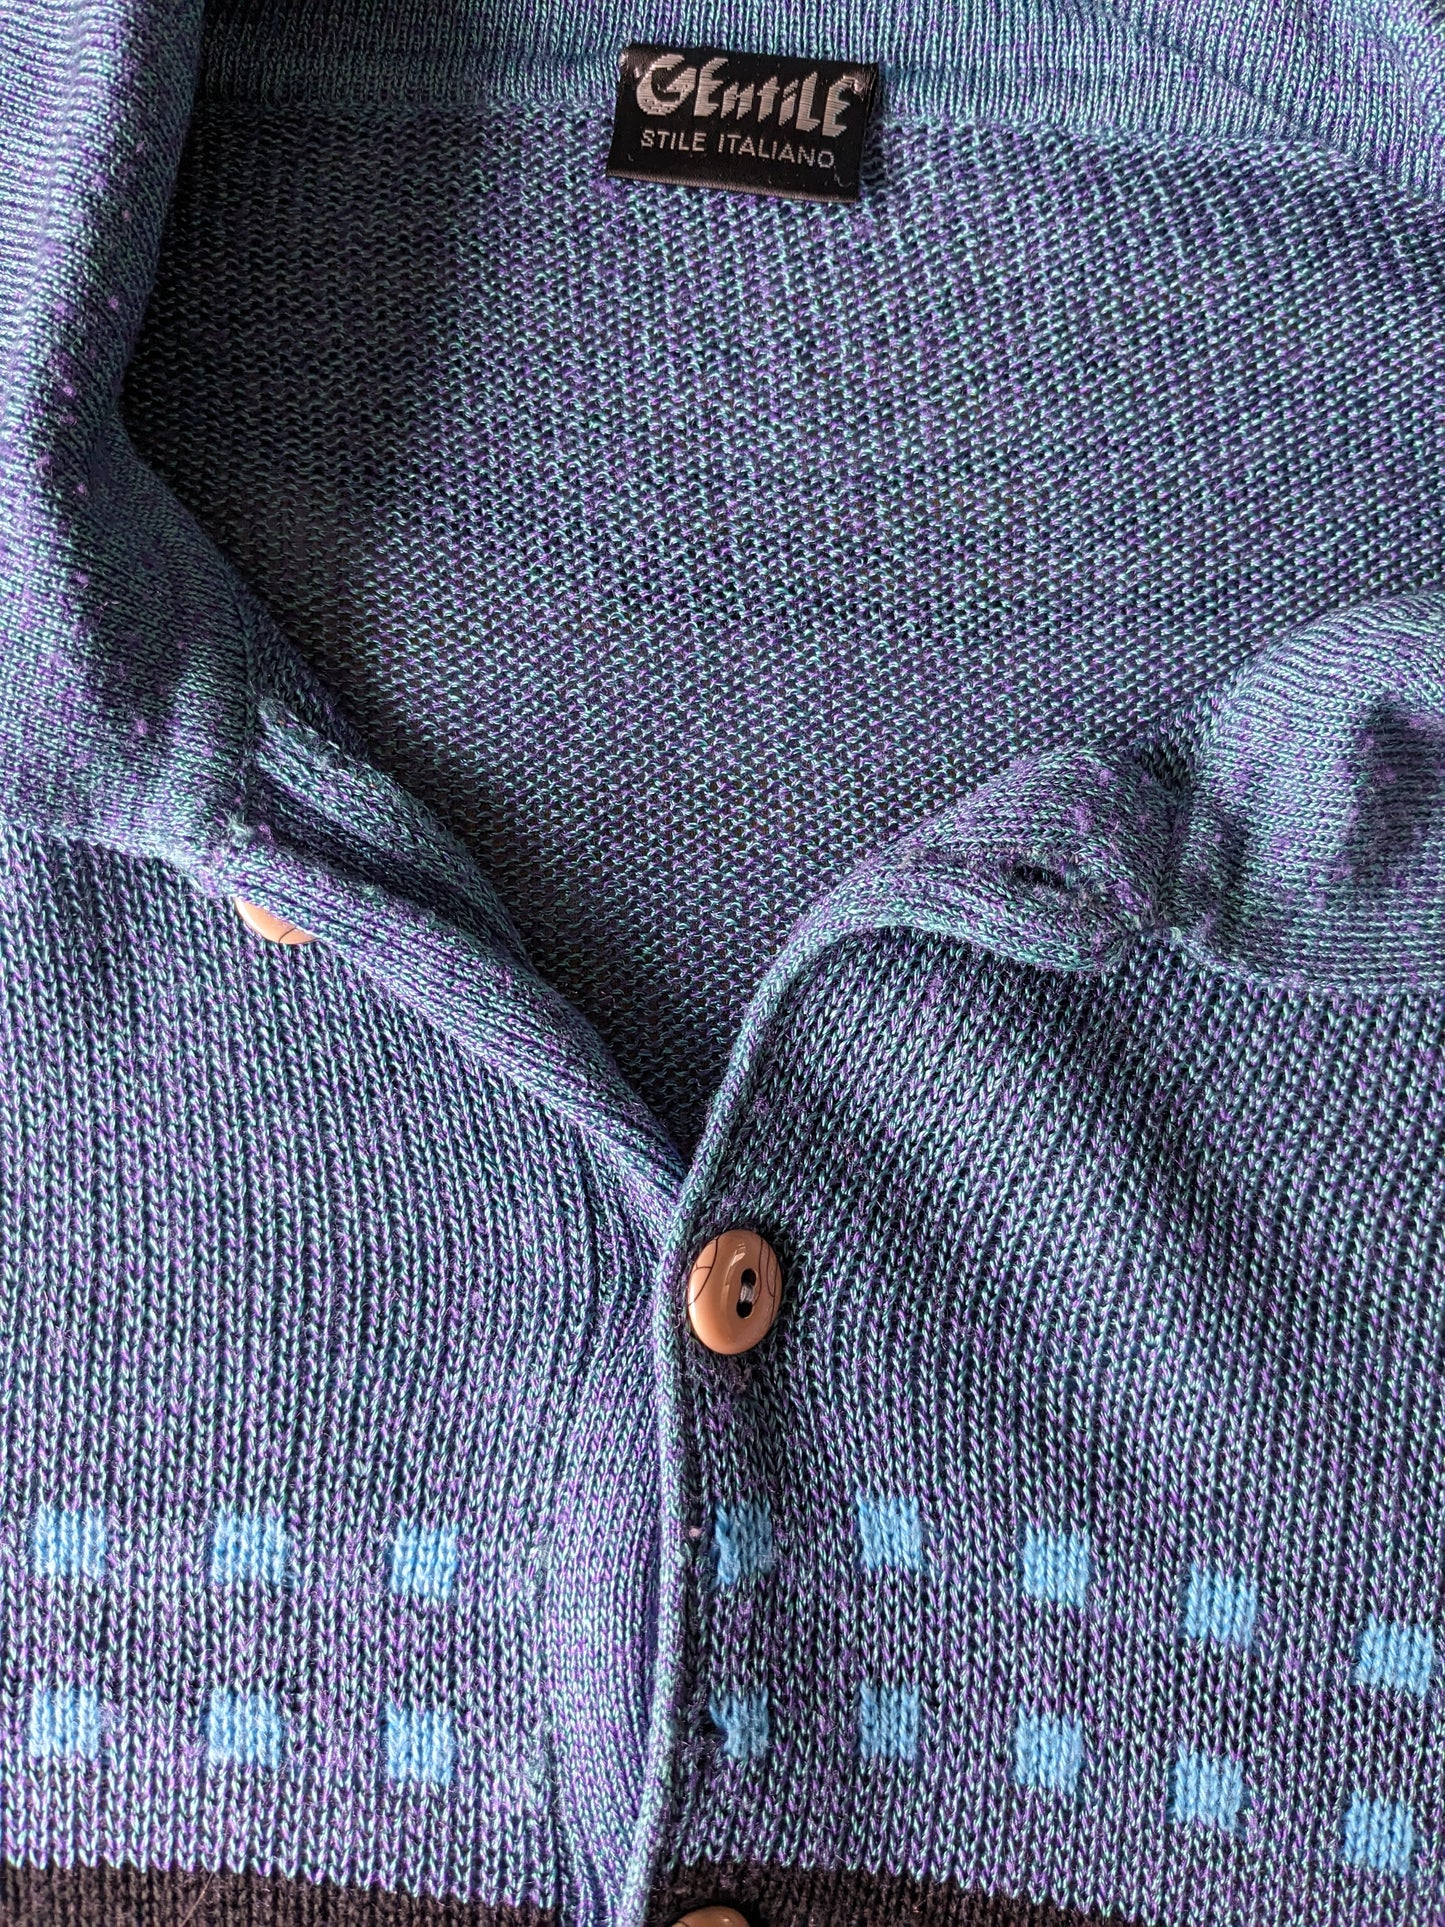 Vintage Gentile Polo Sweater. Blue gray purple black. Size L.